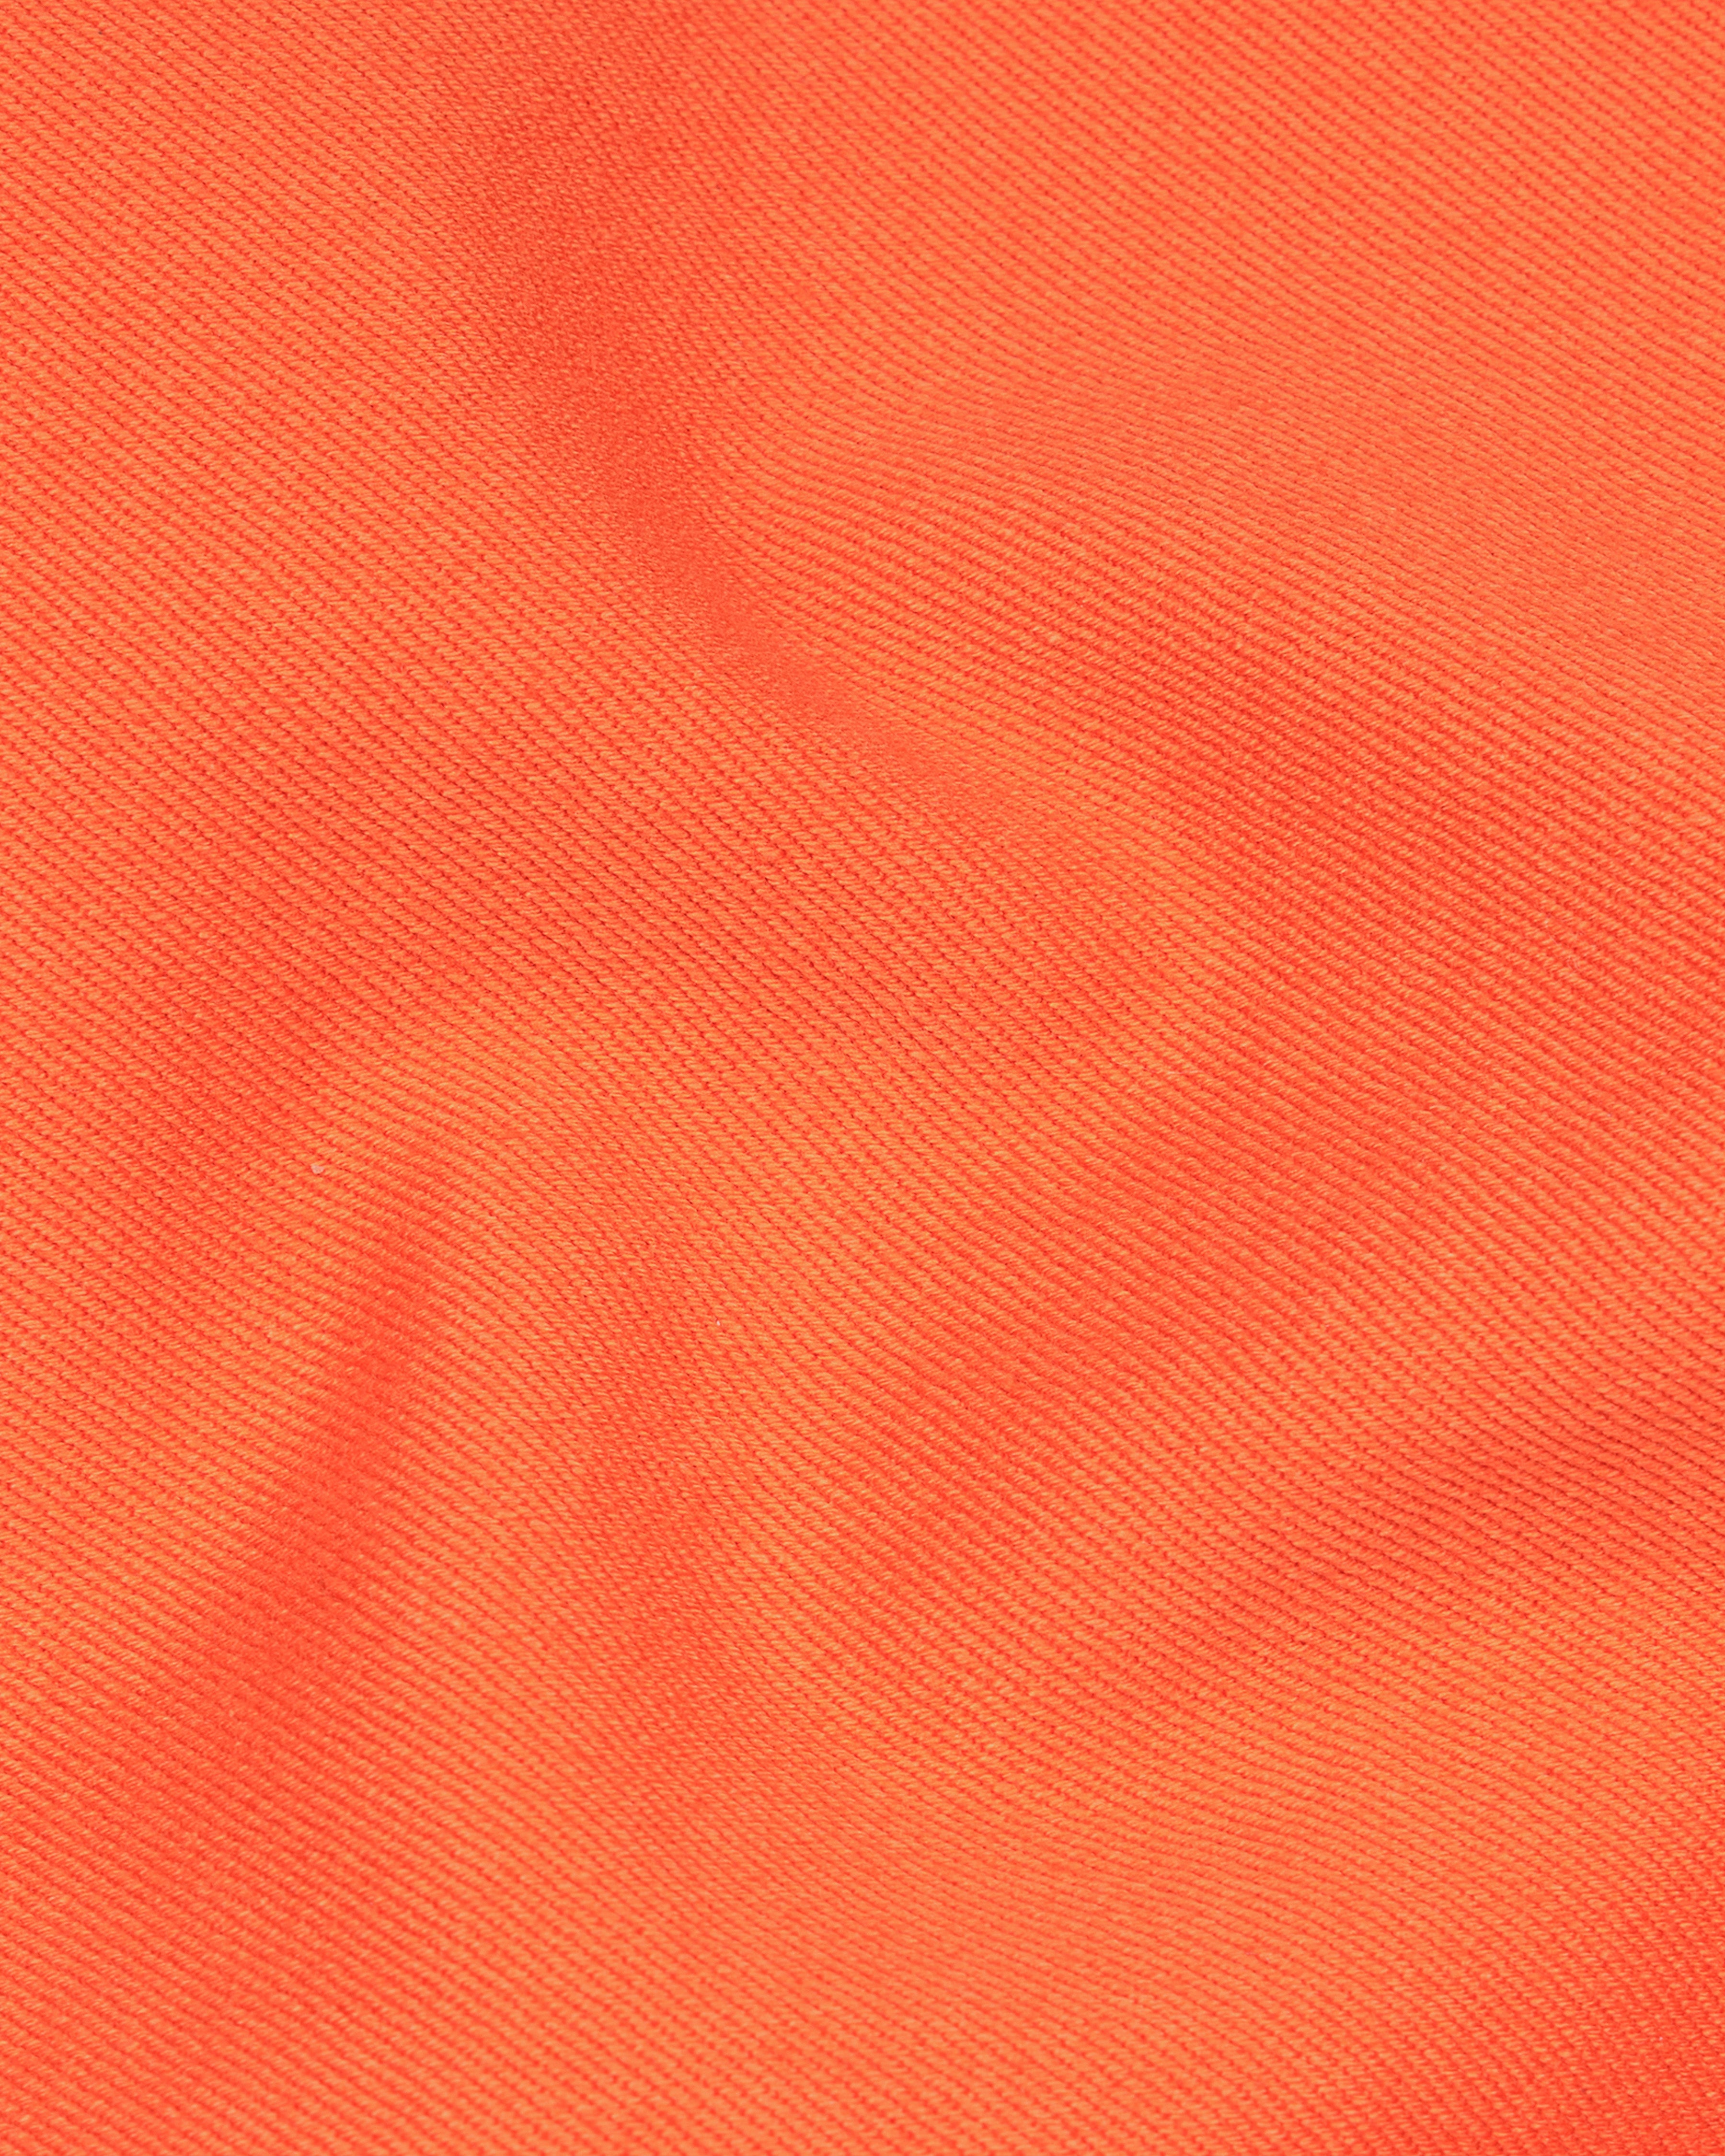 Burning Orange Denim Shorts SR185-28, SR185-30, SR185-32, SR185-34, SR185-36, SR185-38, SR185-40, SR185-42, SR185-44